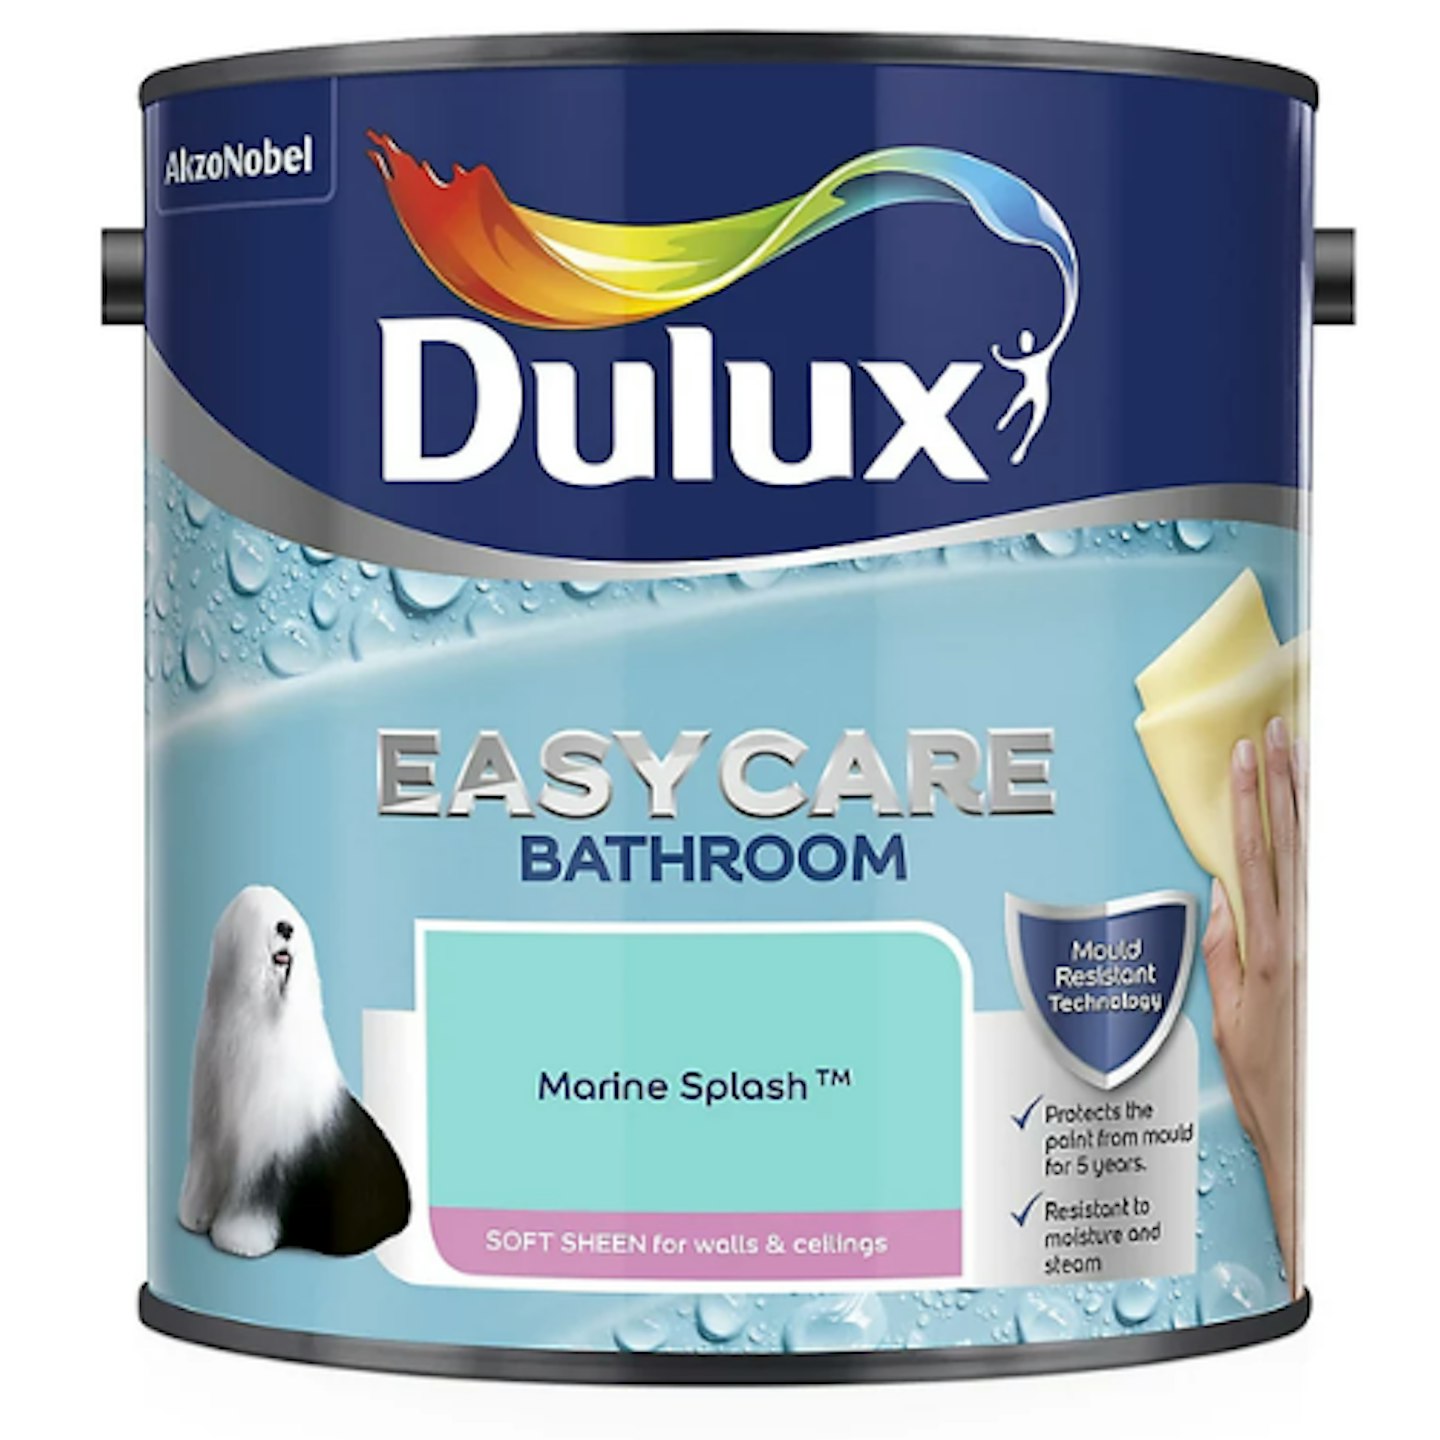 Dulux Easycare Bathroom Marine Splash Soft Sheen Emulsion Paint, 2.5L